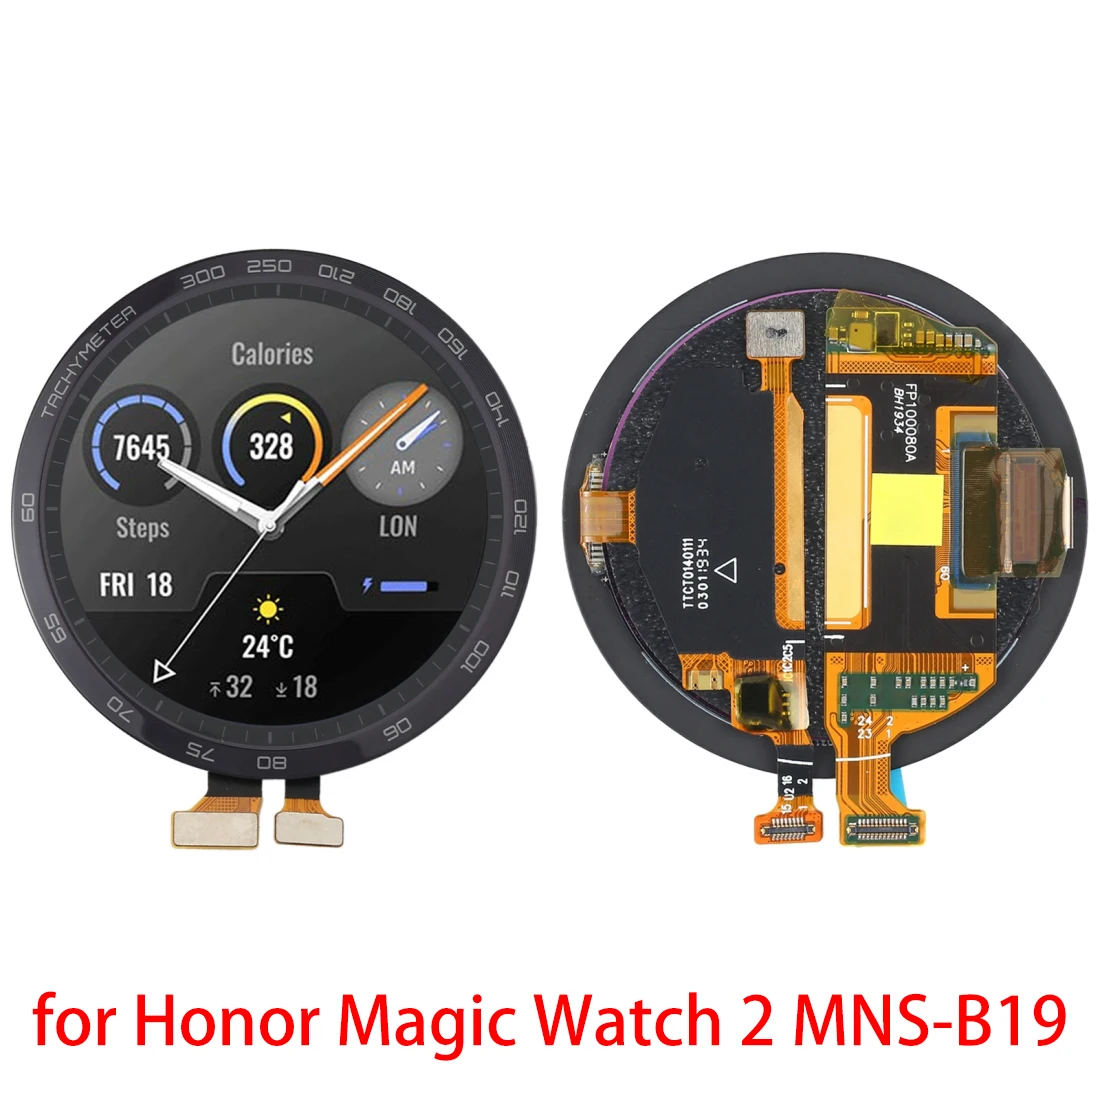 

ЖК-экран и дигитайзер в сборе для Honor Magic Watch 2 MNS-B19